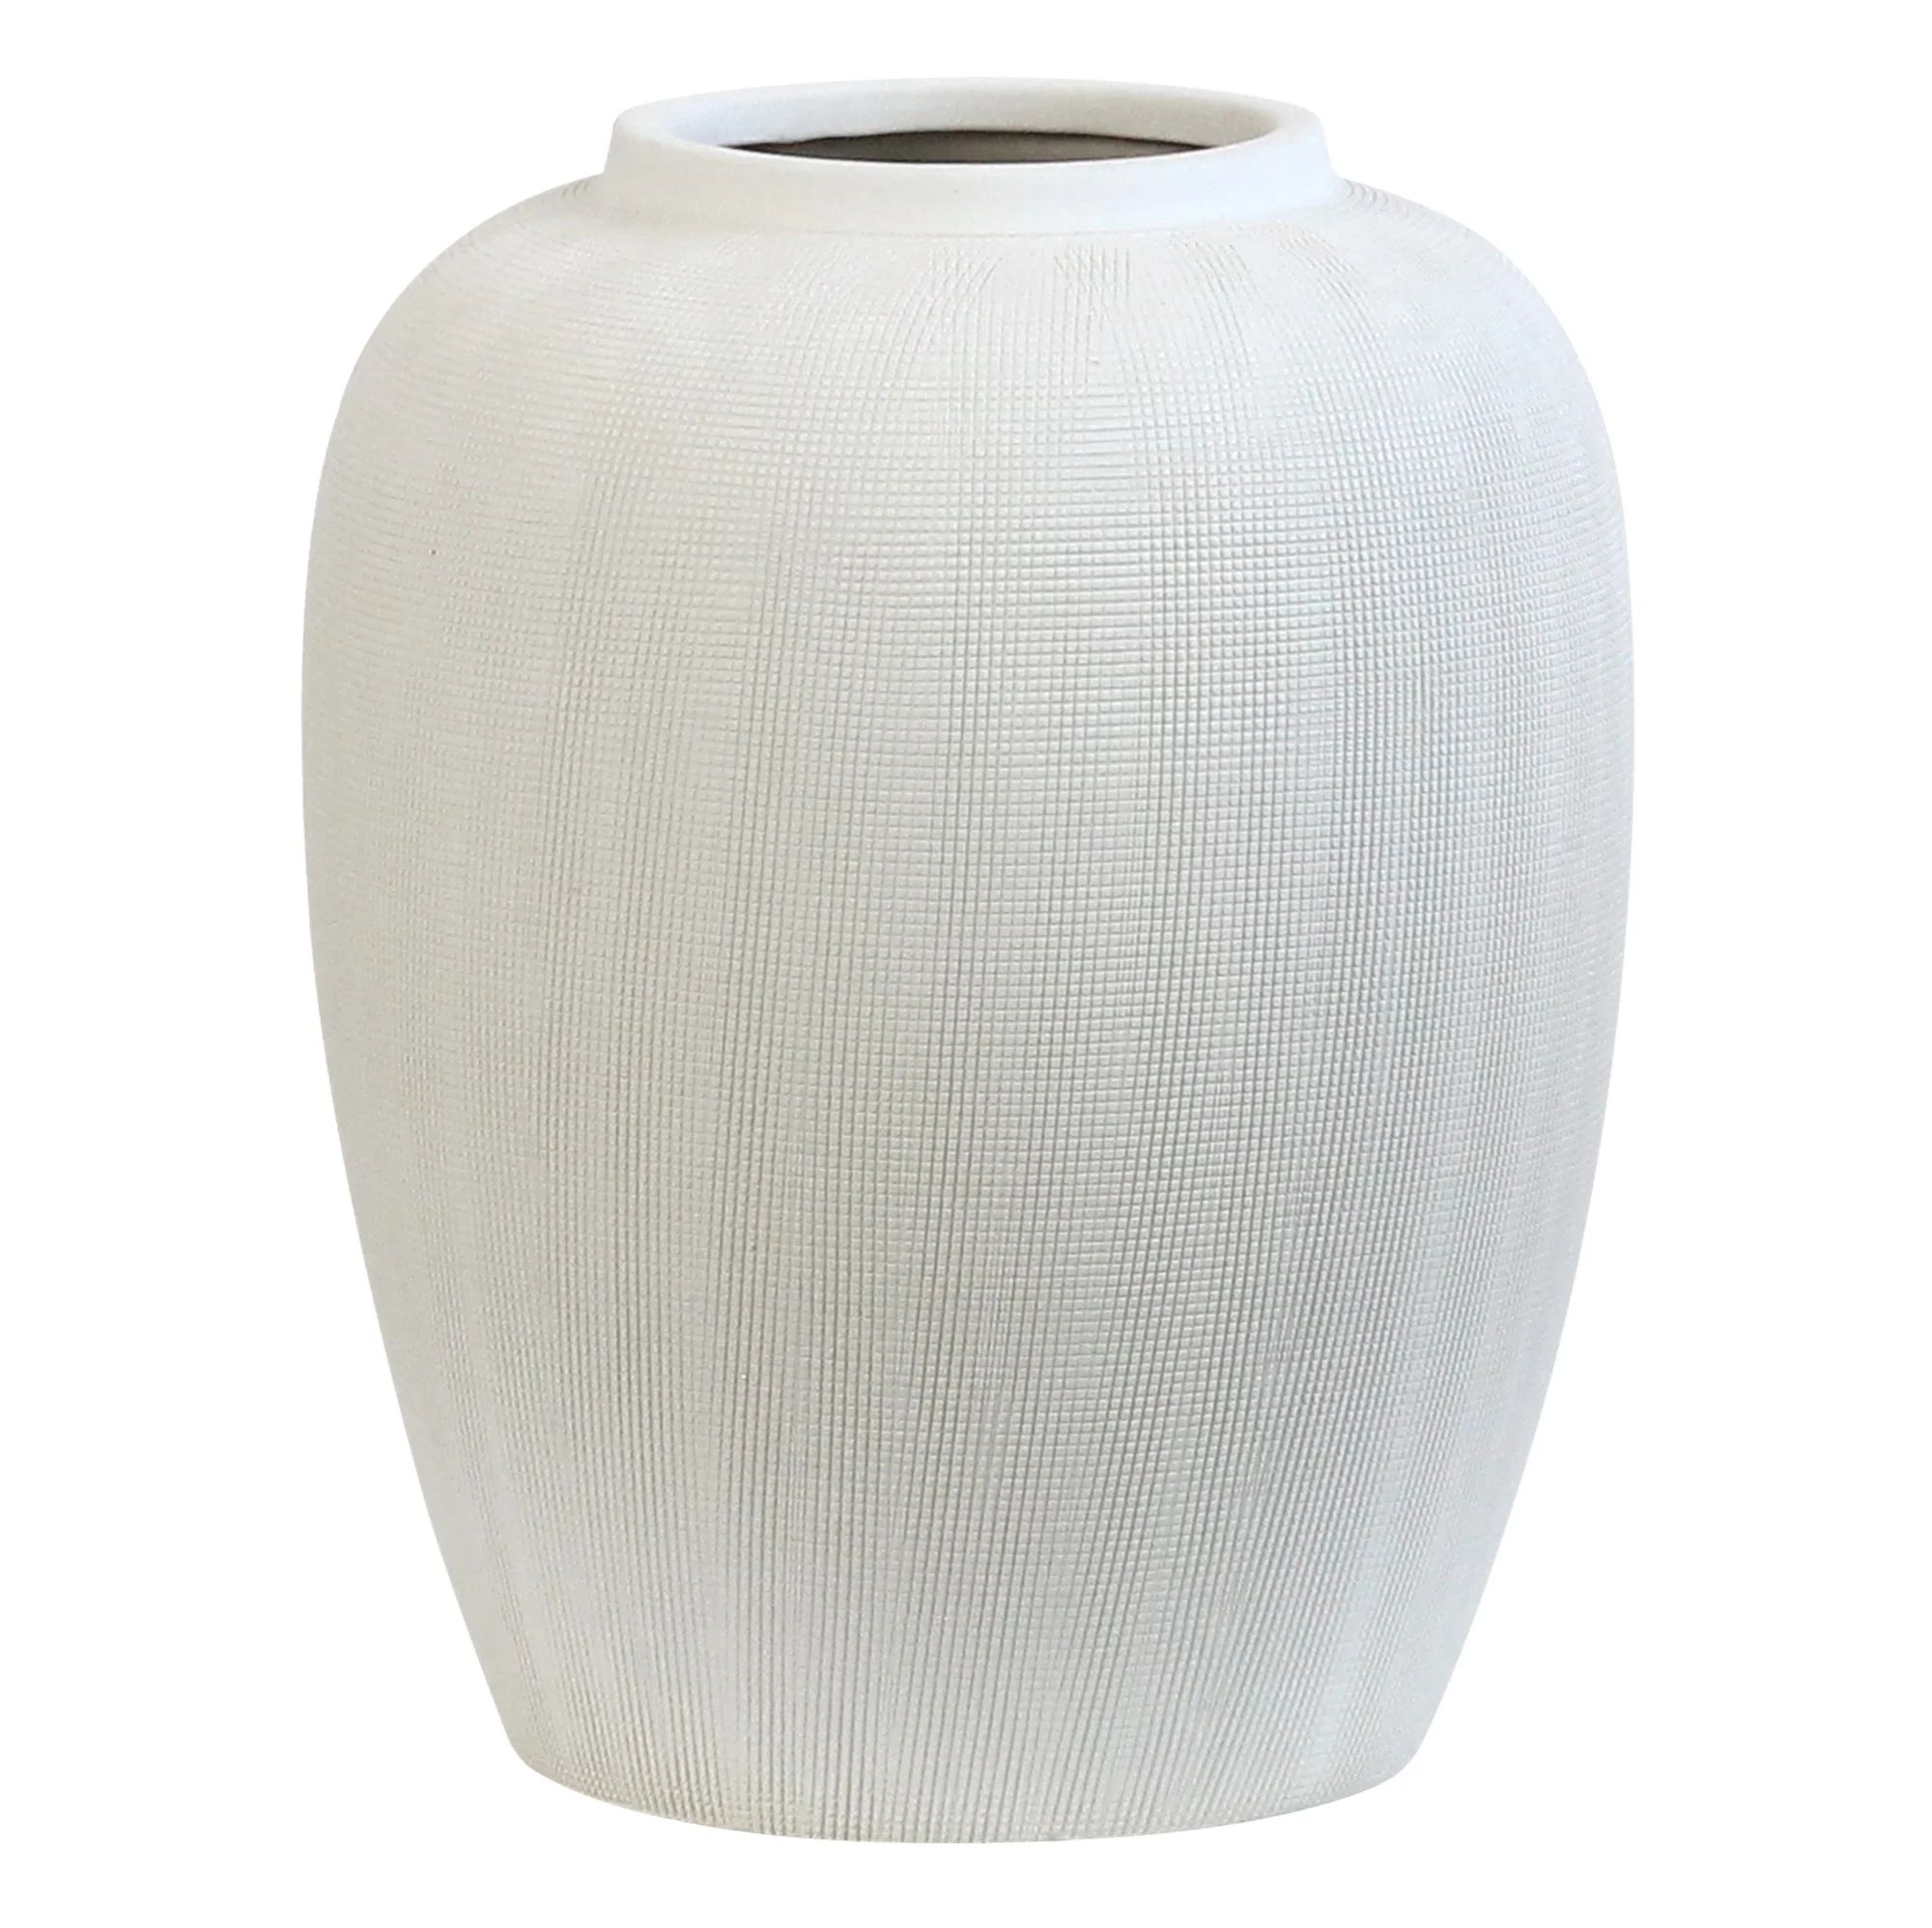 Rhodes Vase - Medium Flower Vase - White Ceramic Vases Patterned | Walmart (US)